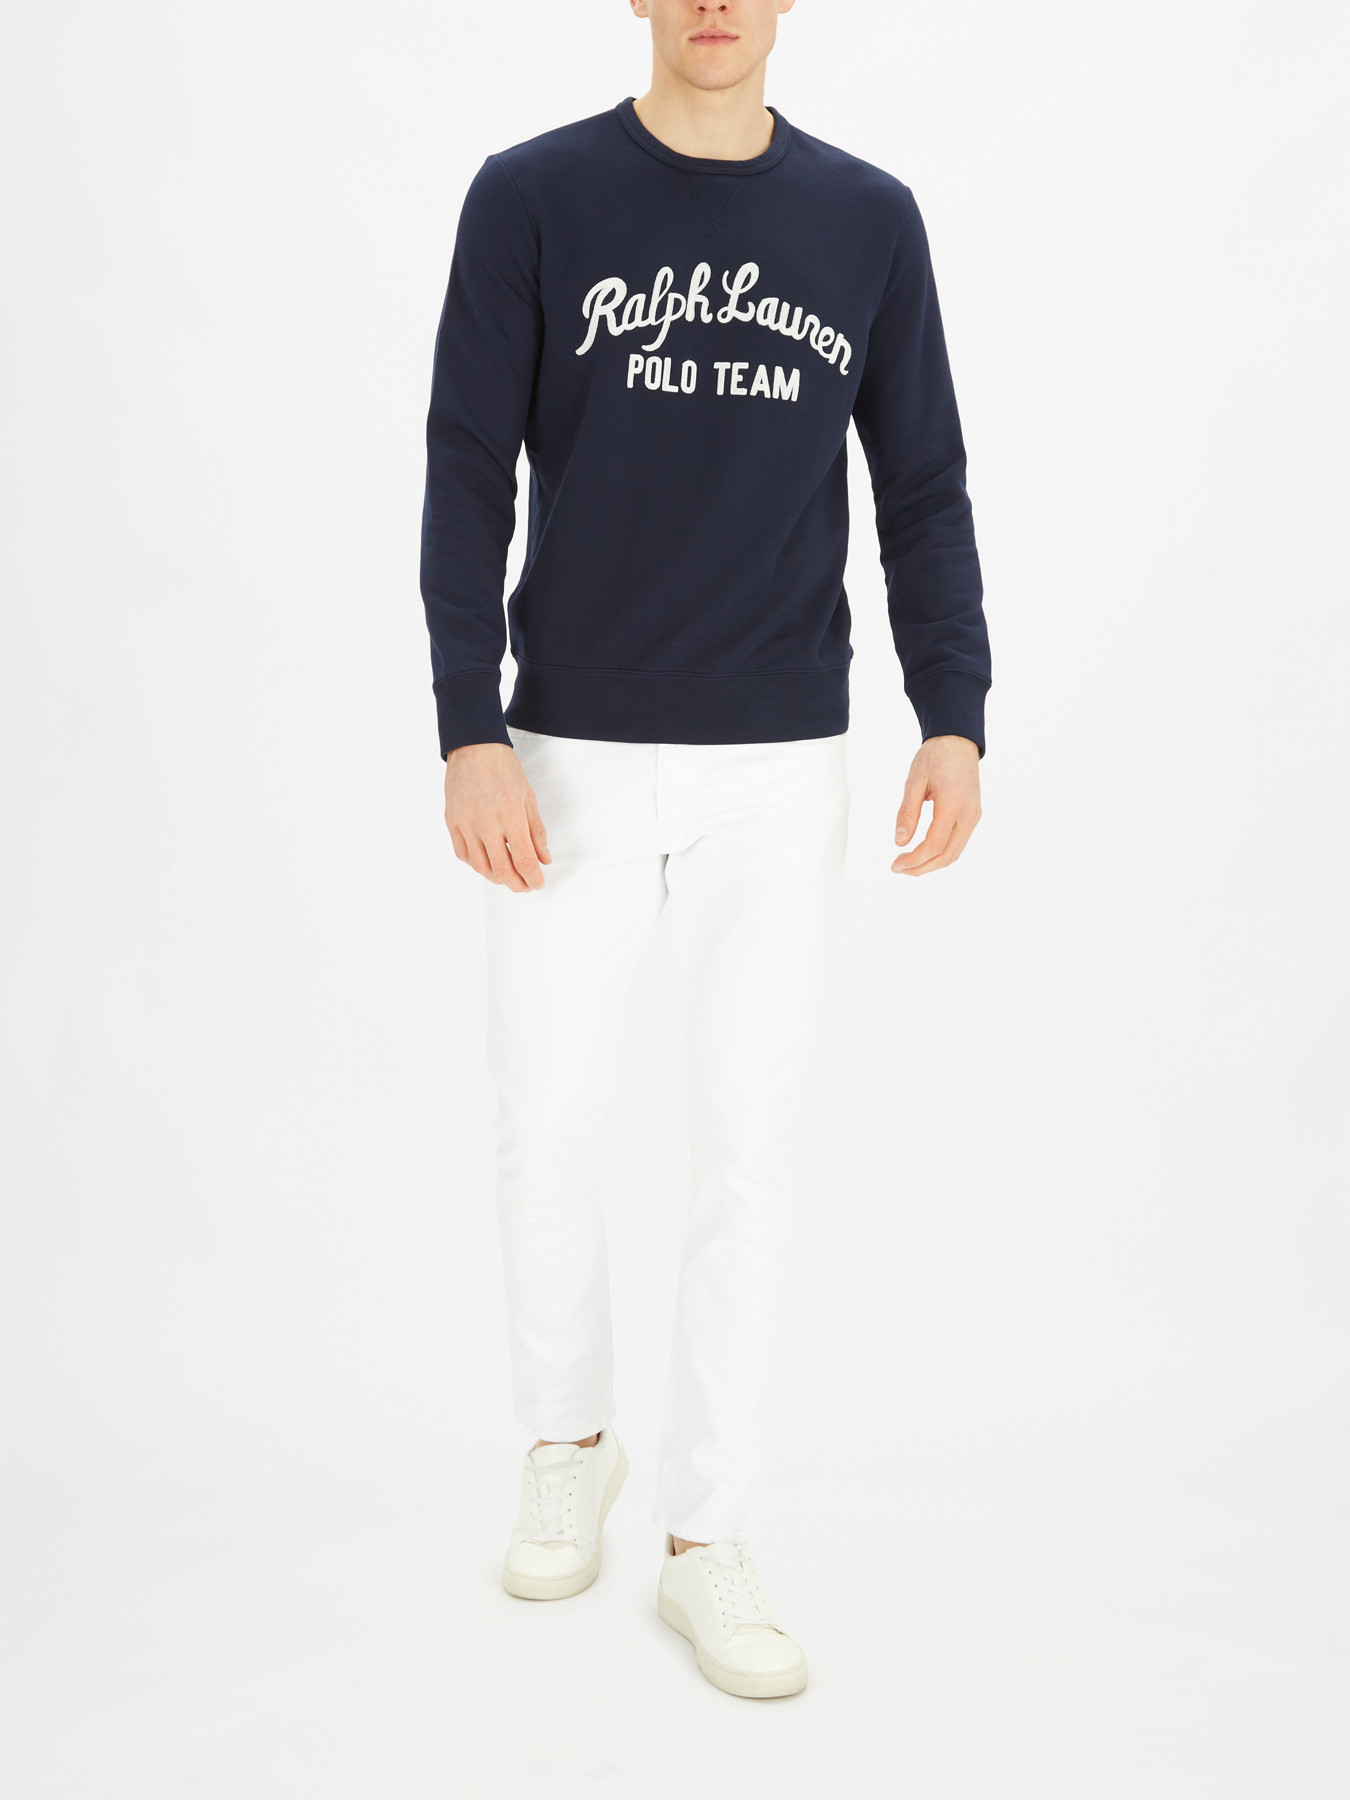 Men's Polo Ralph Lauren Polo Team Fleece Sweatshirt | Fenwick